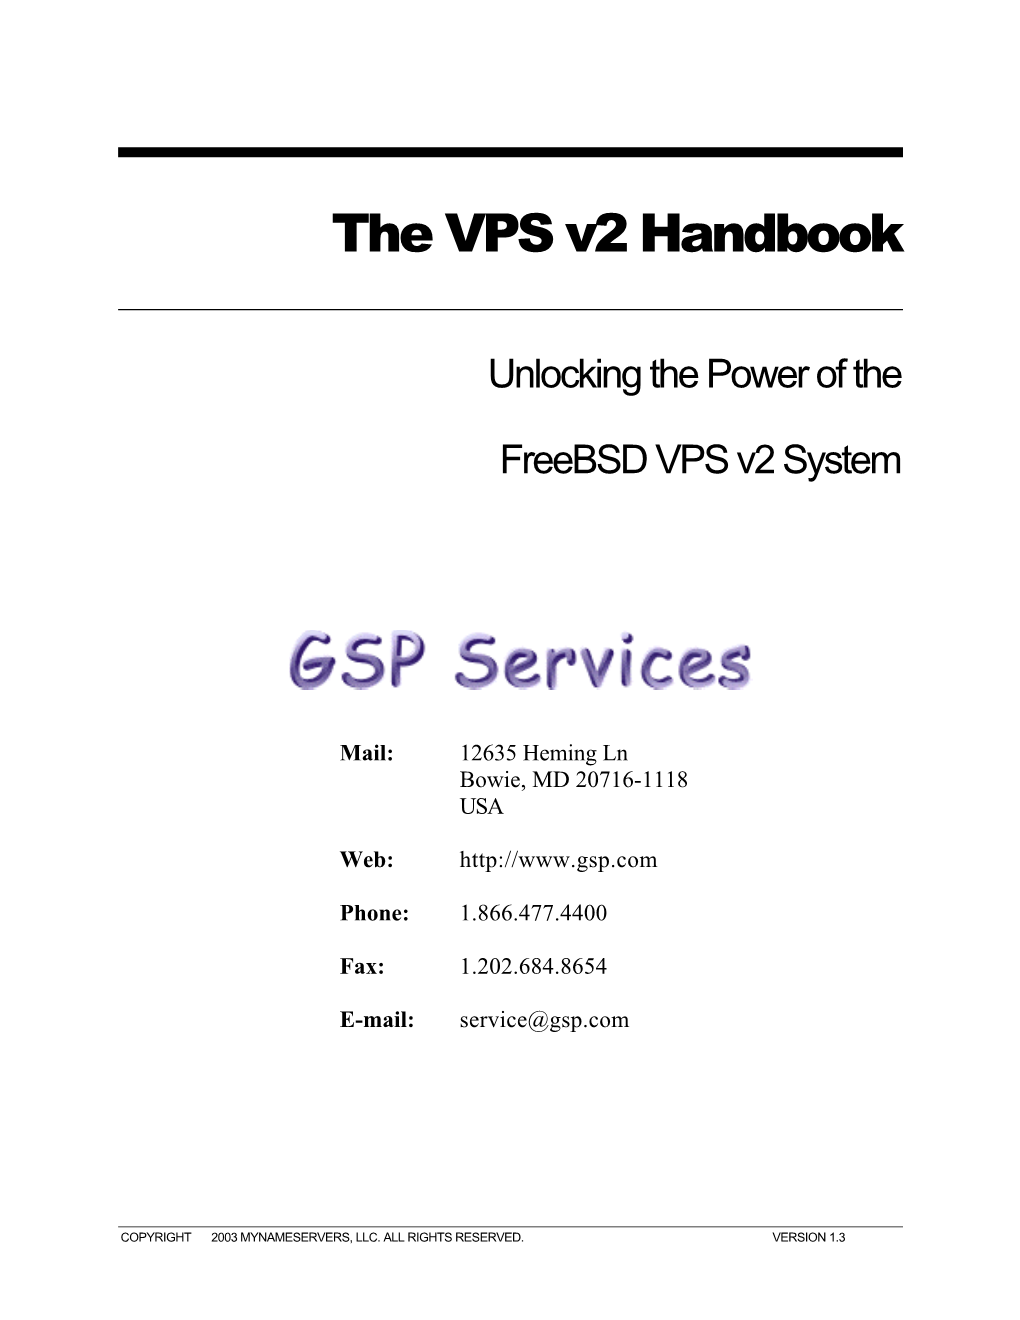 VPS V2 Administrator Handbook